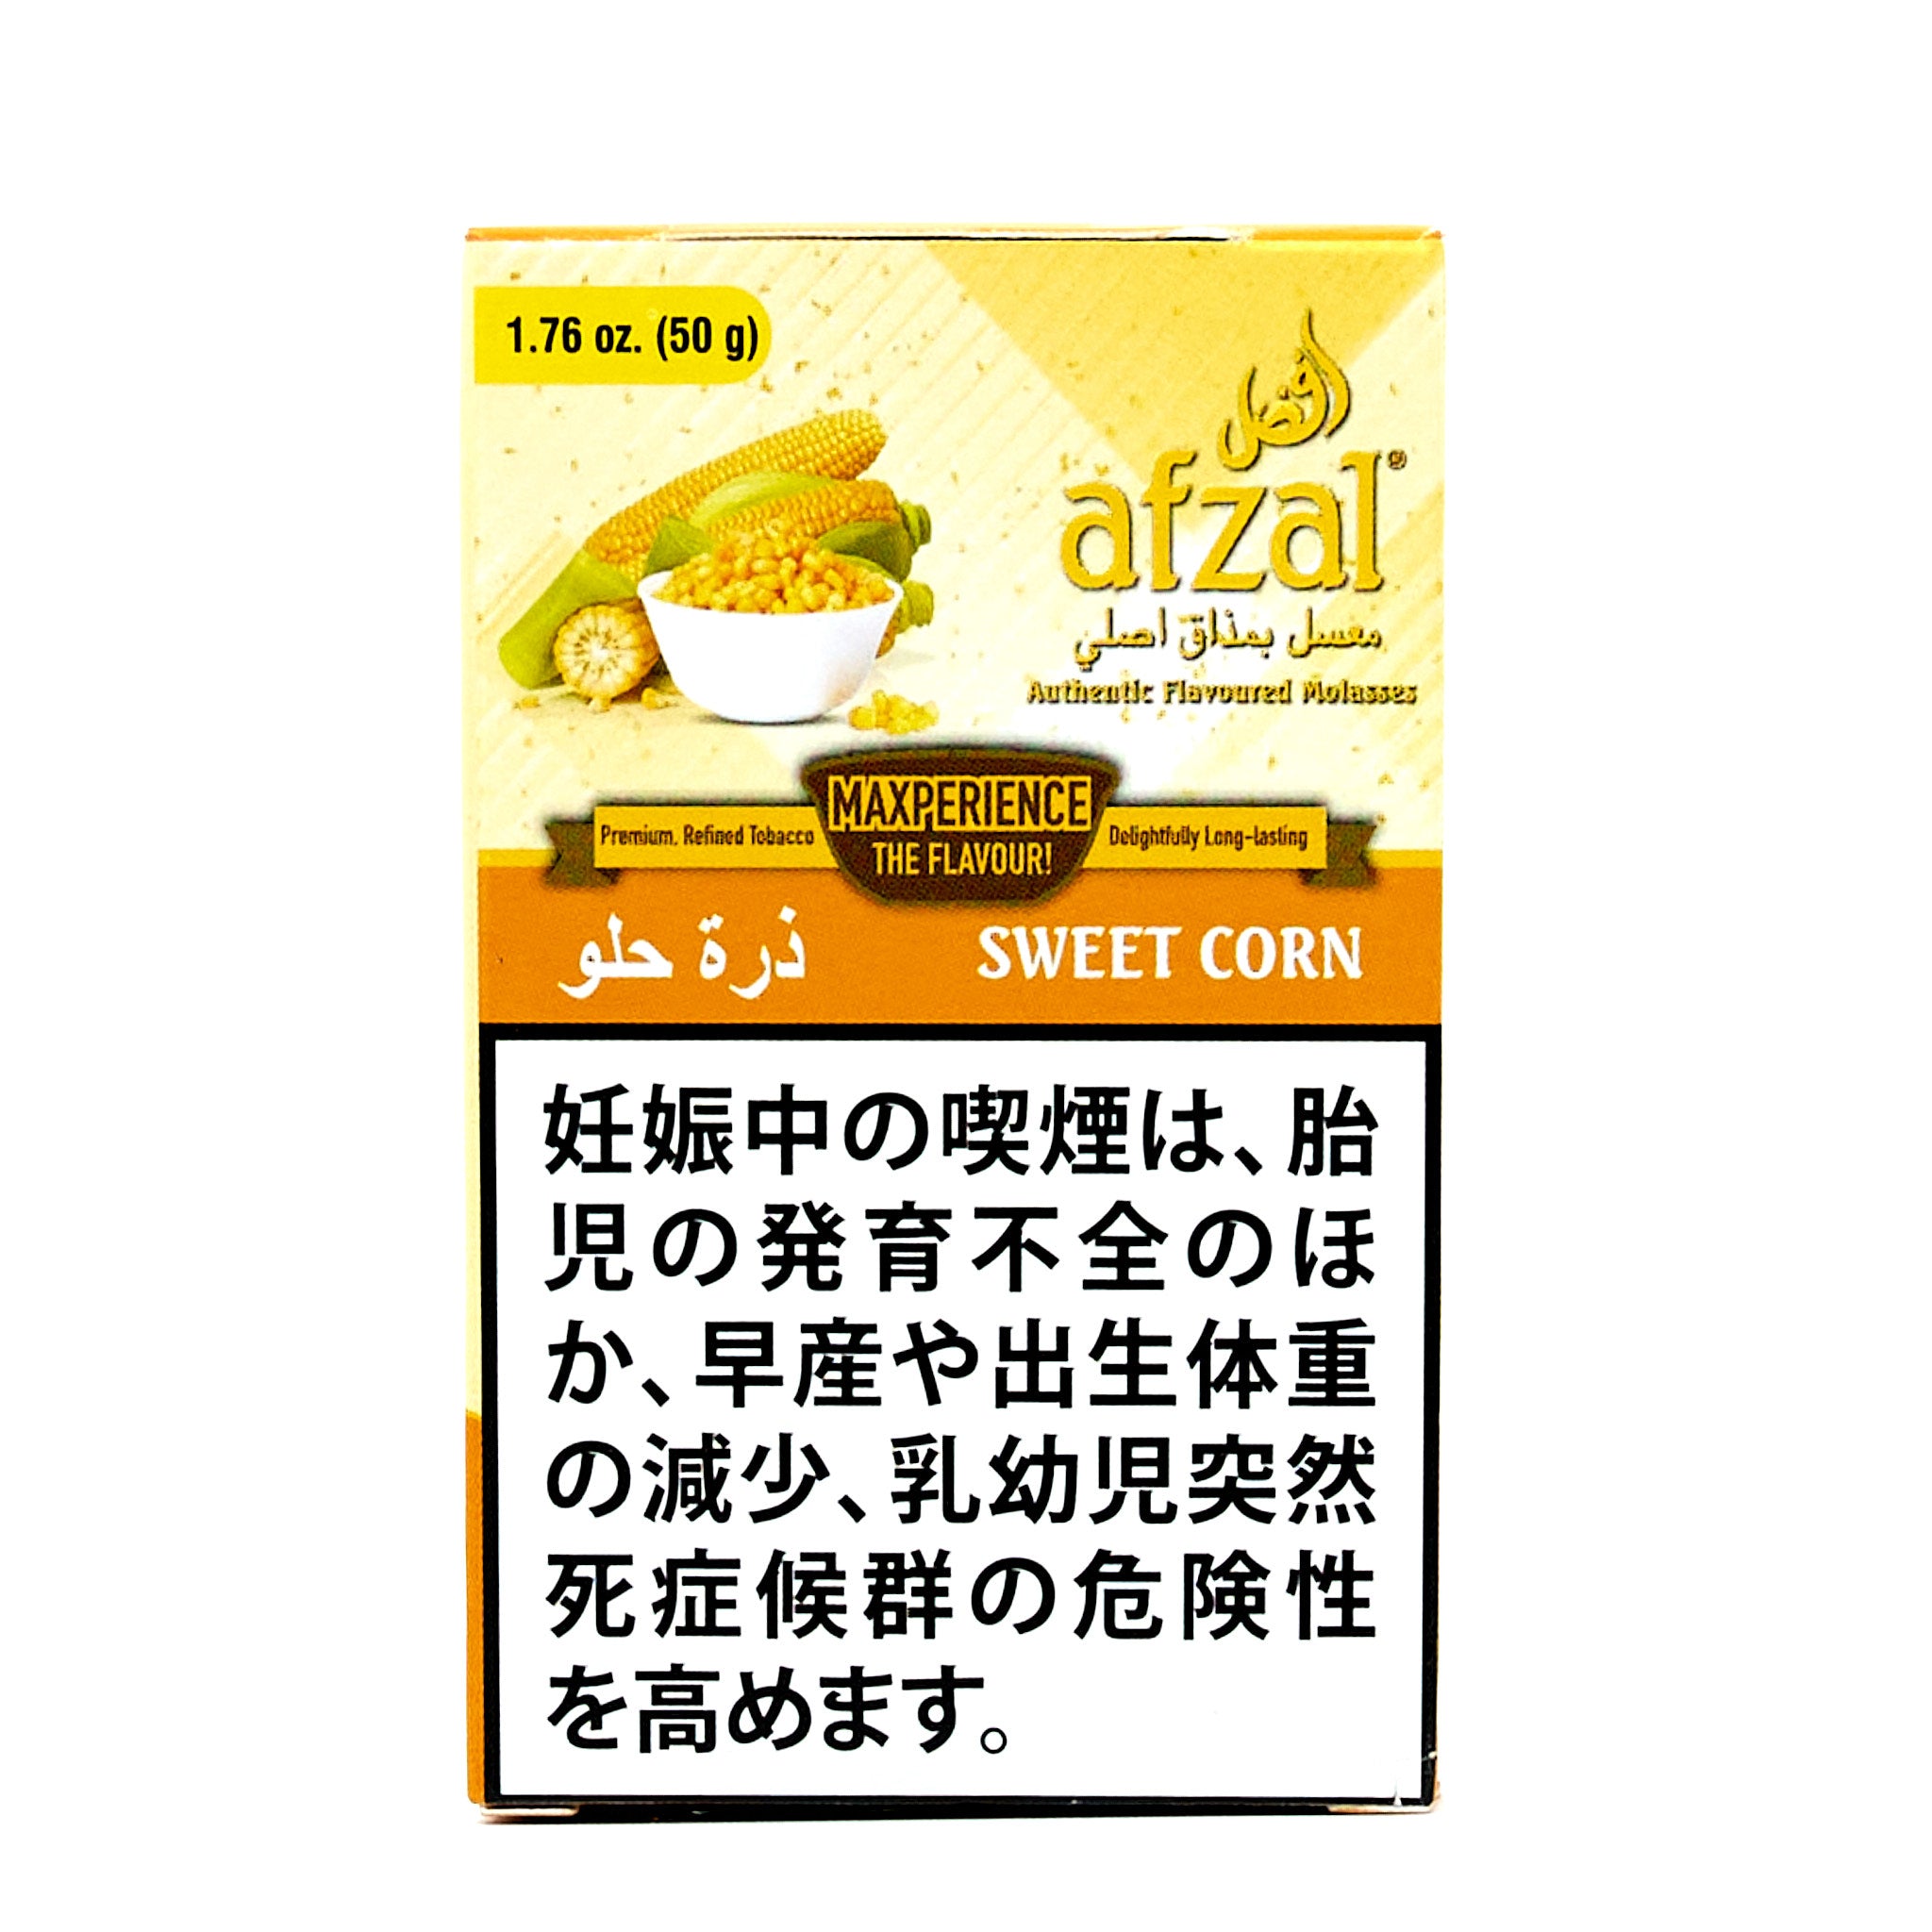 Sweet Corn / スイートコーン (50g)